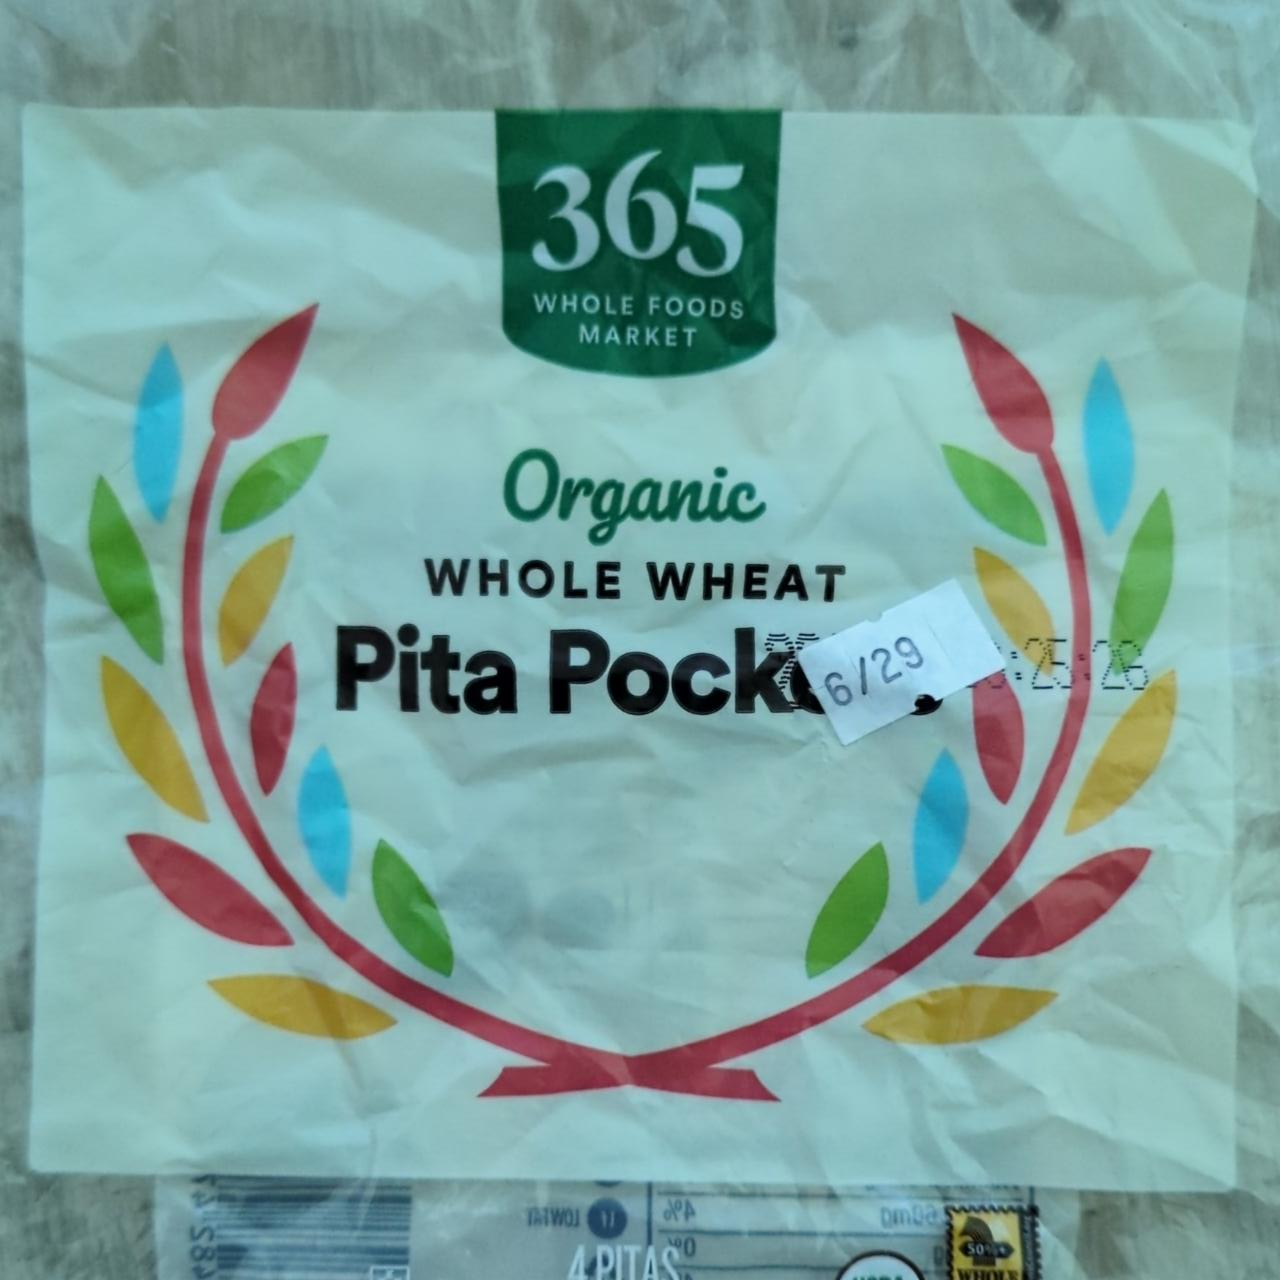 Fotografie - Organic Whole Wheat Pita Pockets 365 Whole Foods Market